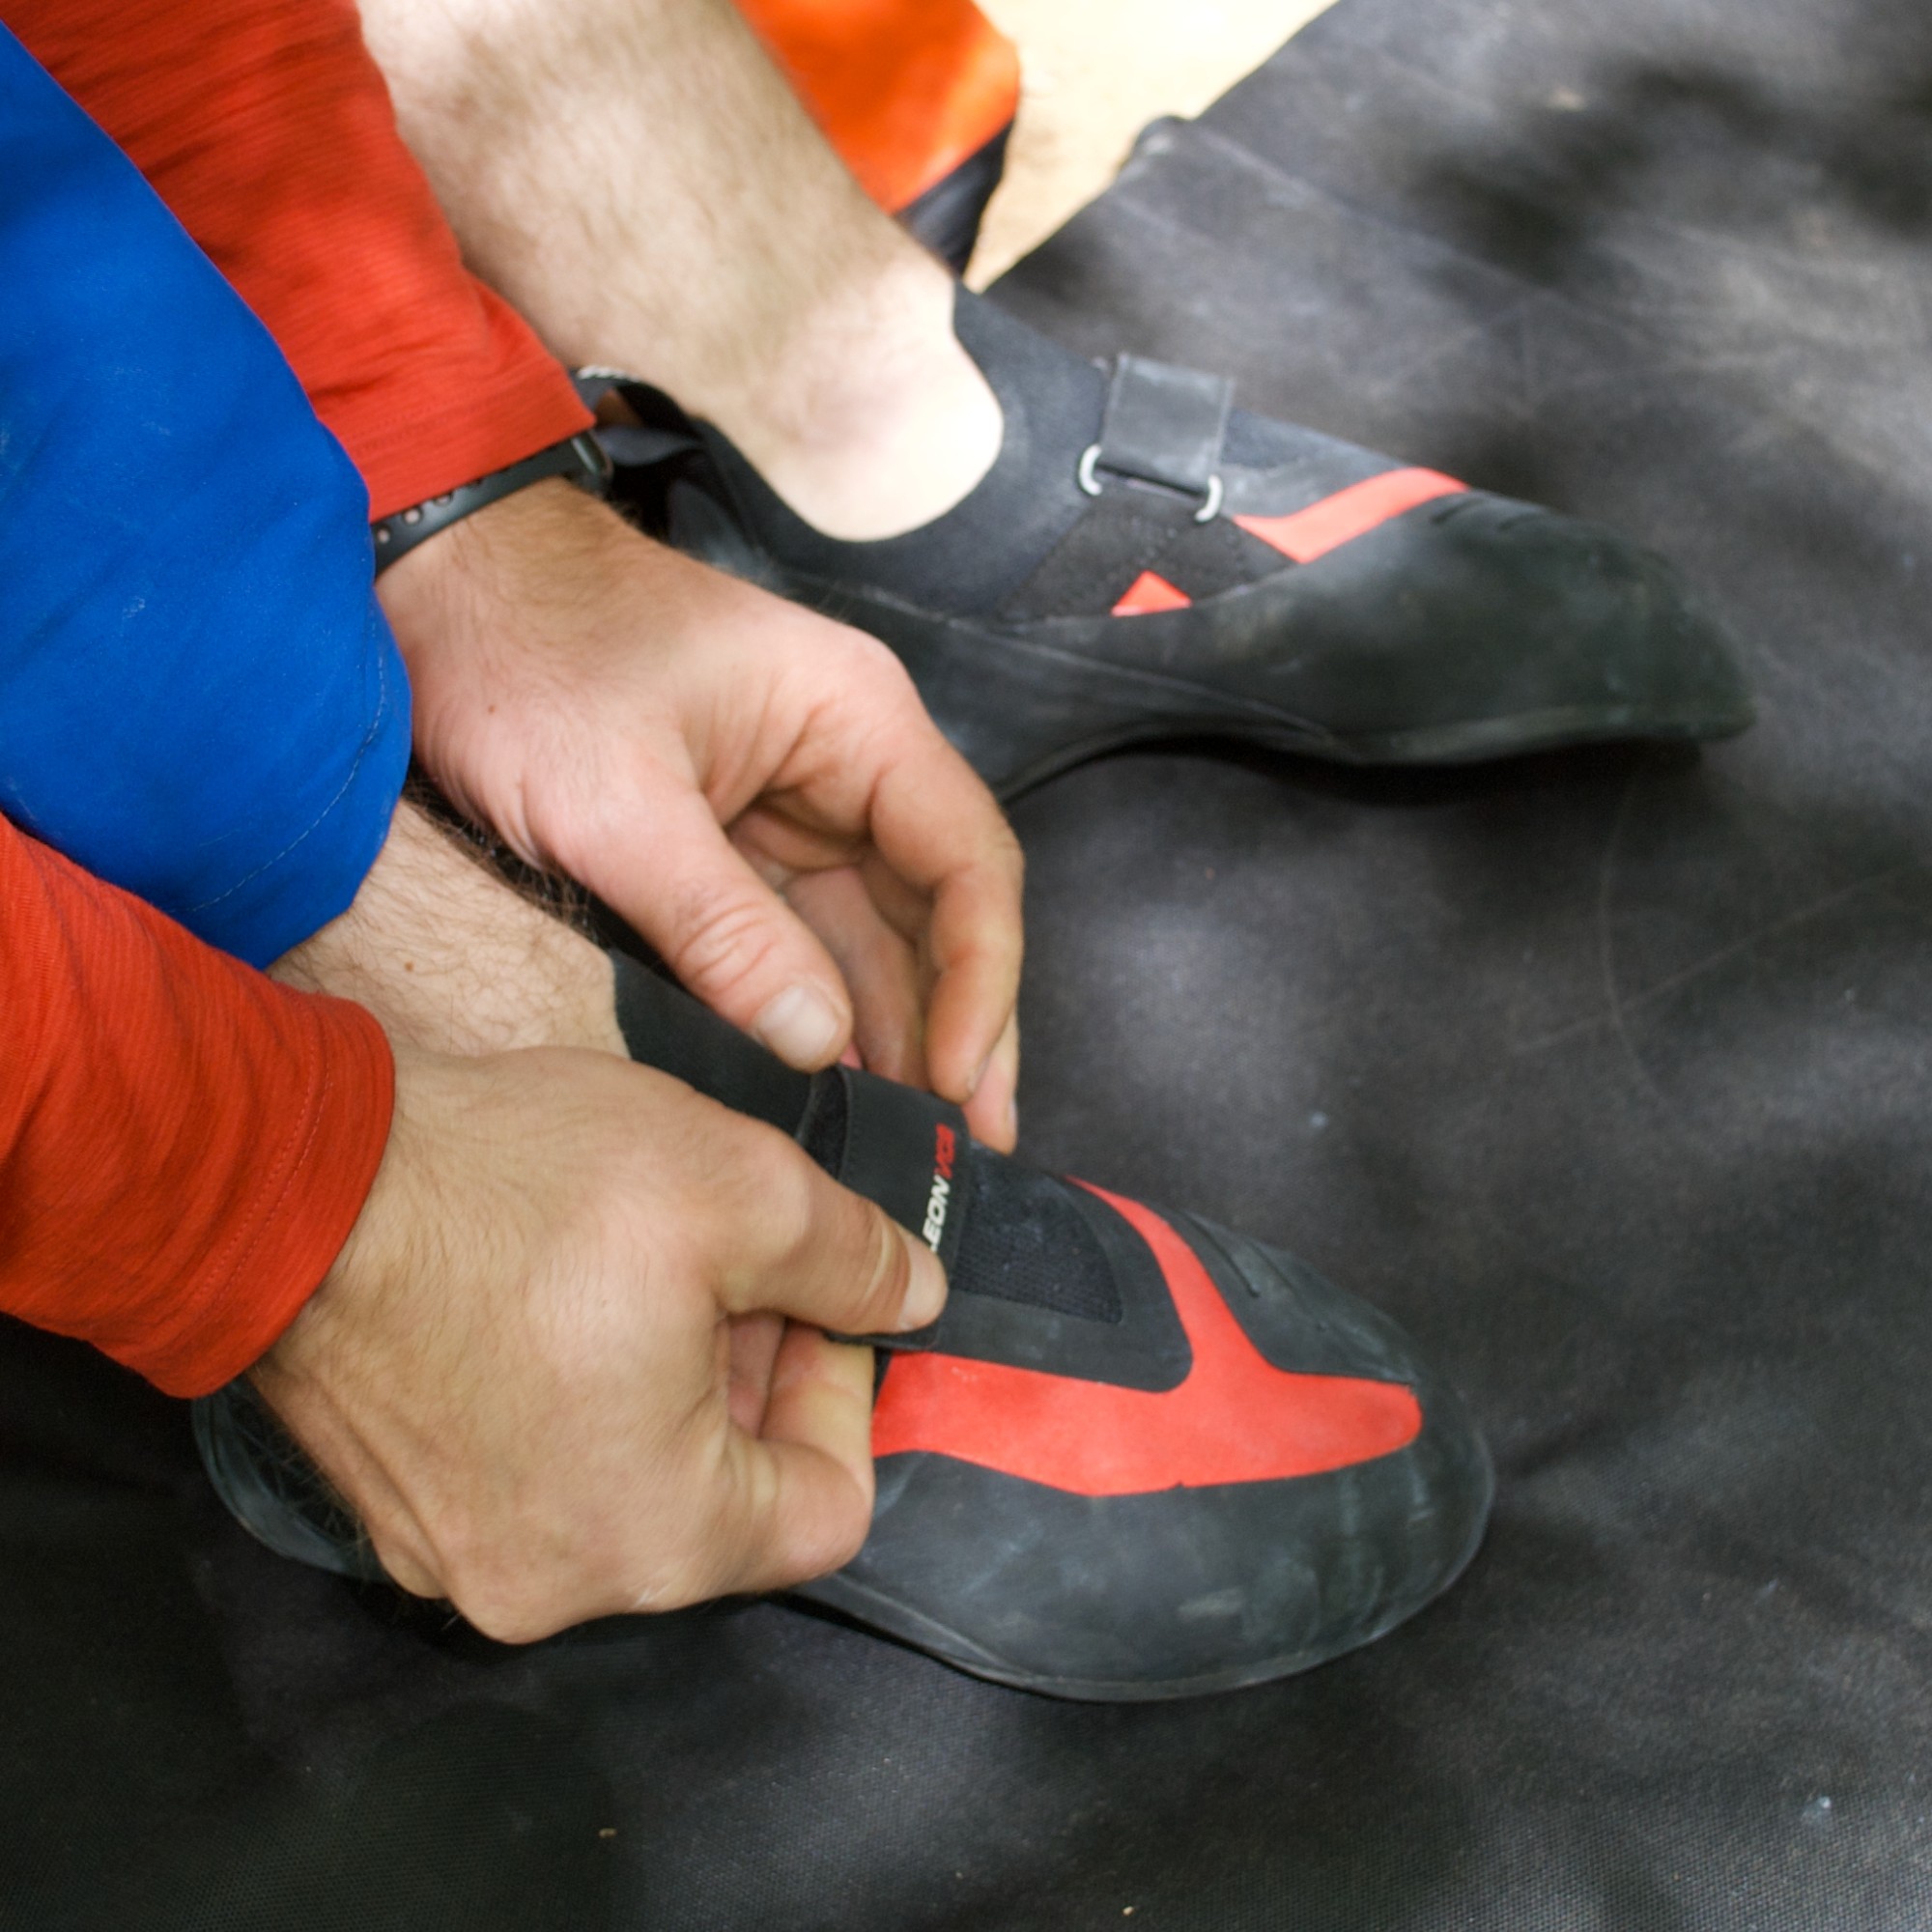 Adidas Five Ten Aleon Rock Climbing Shoes